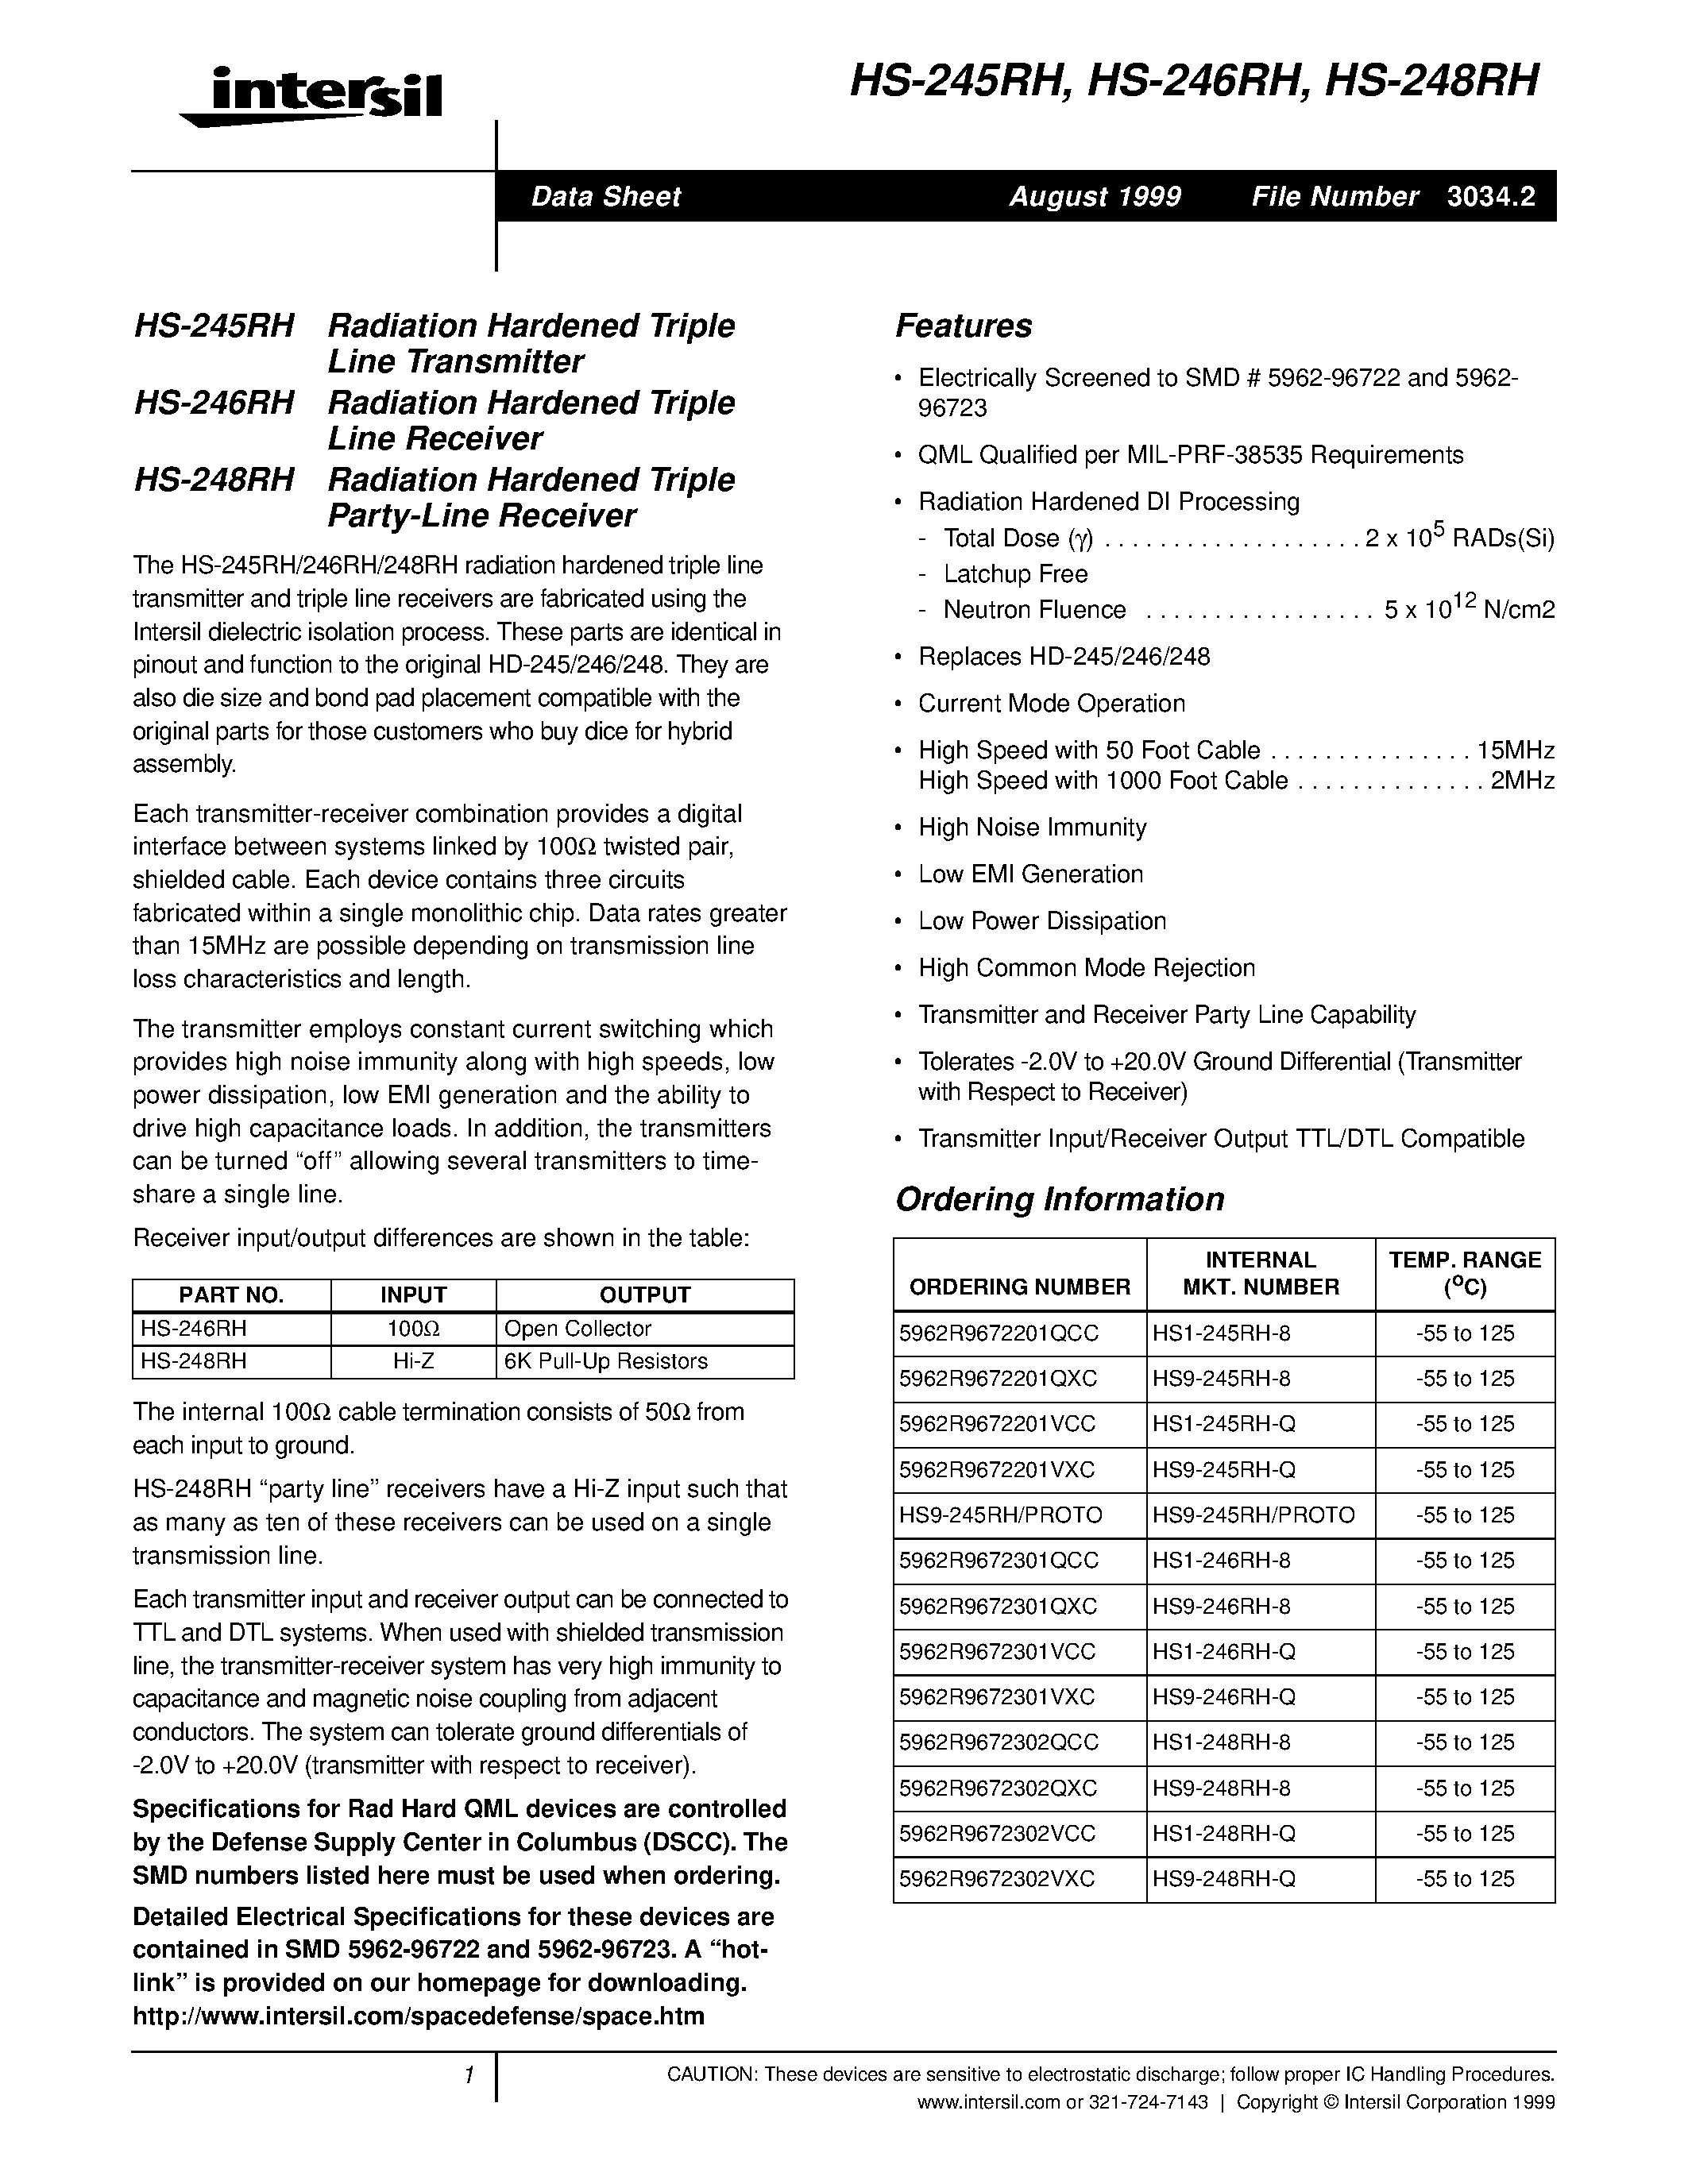 Даташит HS1-245RH-Q - Radiation Hardened Triple Line(party-Line) Transmitter страница 1